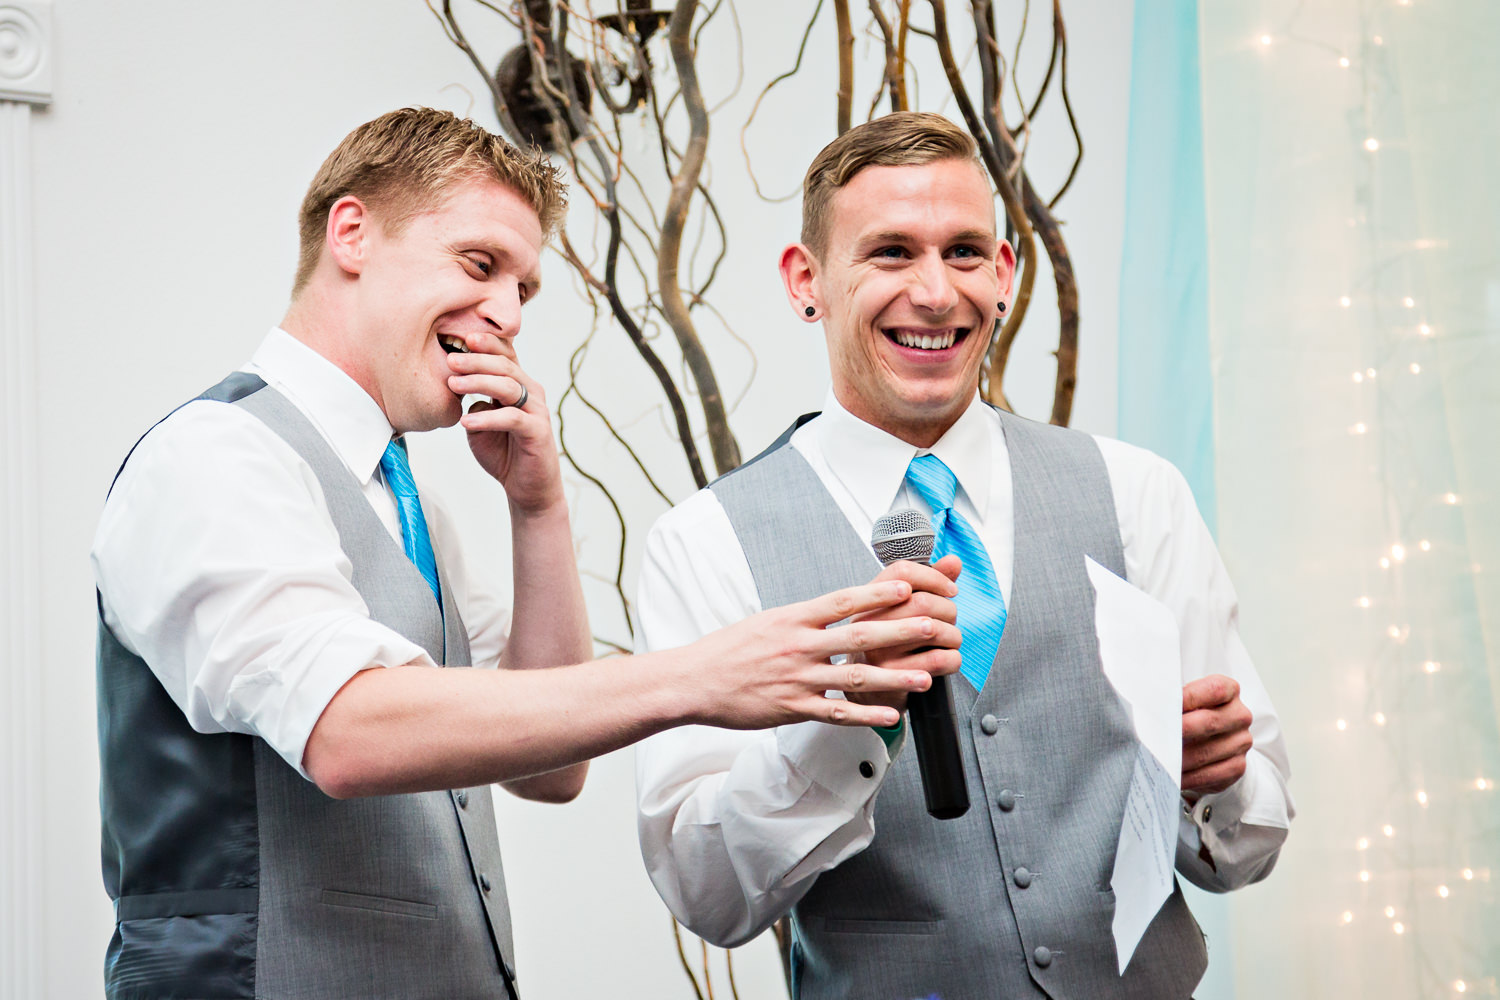 billings-montana-chanceys-wedding-reception-grooms-brothers-toast.jpg